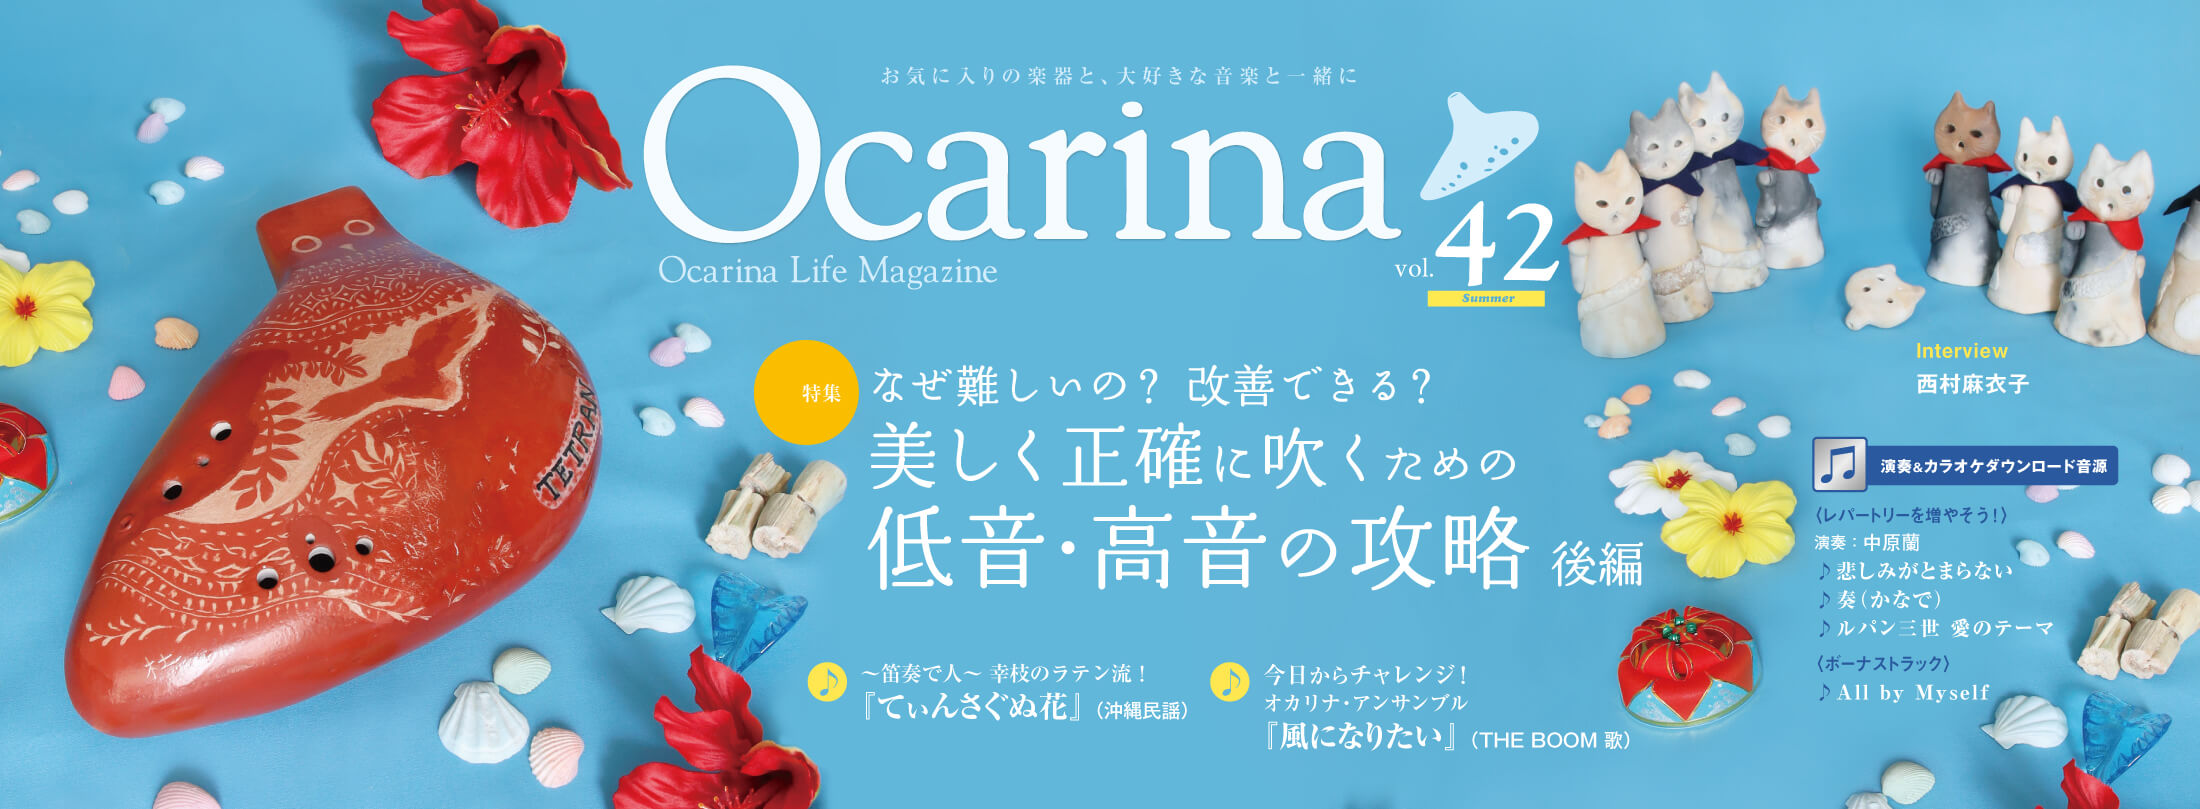 Ocarina 42号